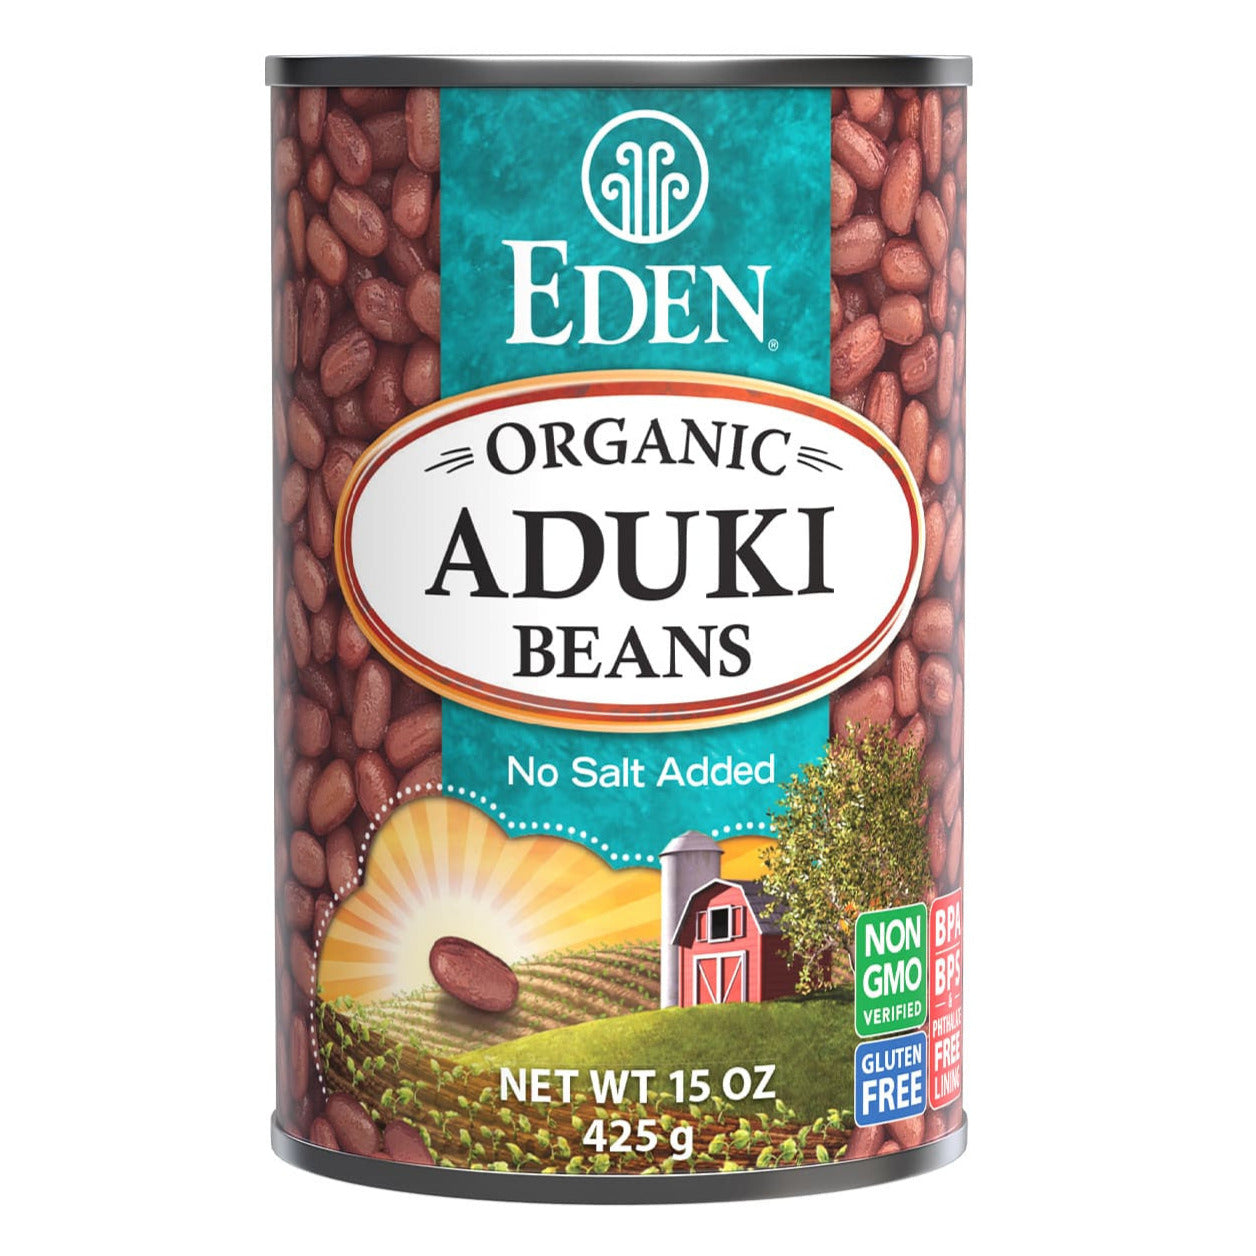 Canned Beans, Adzuki (398 mL)